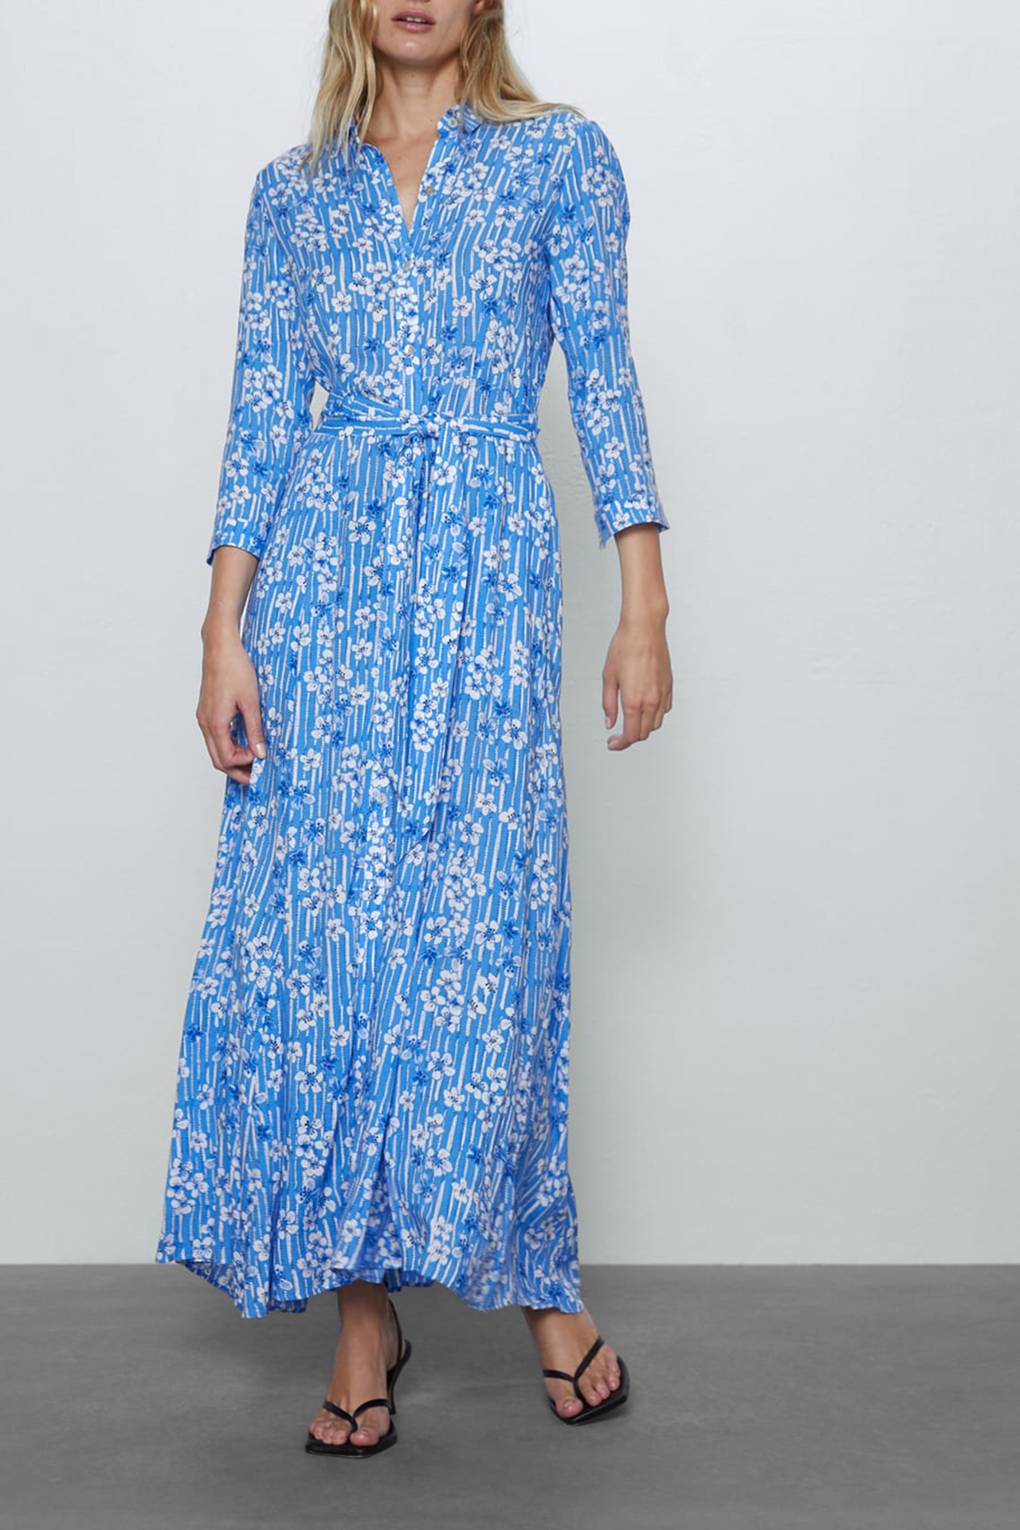 Summer Dresses 2020: Midi, Maxi, Cotton 